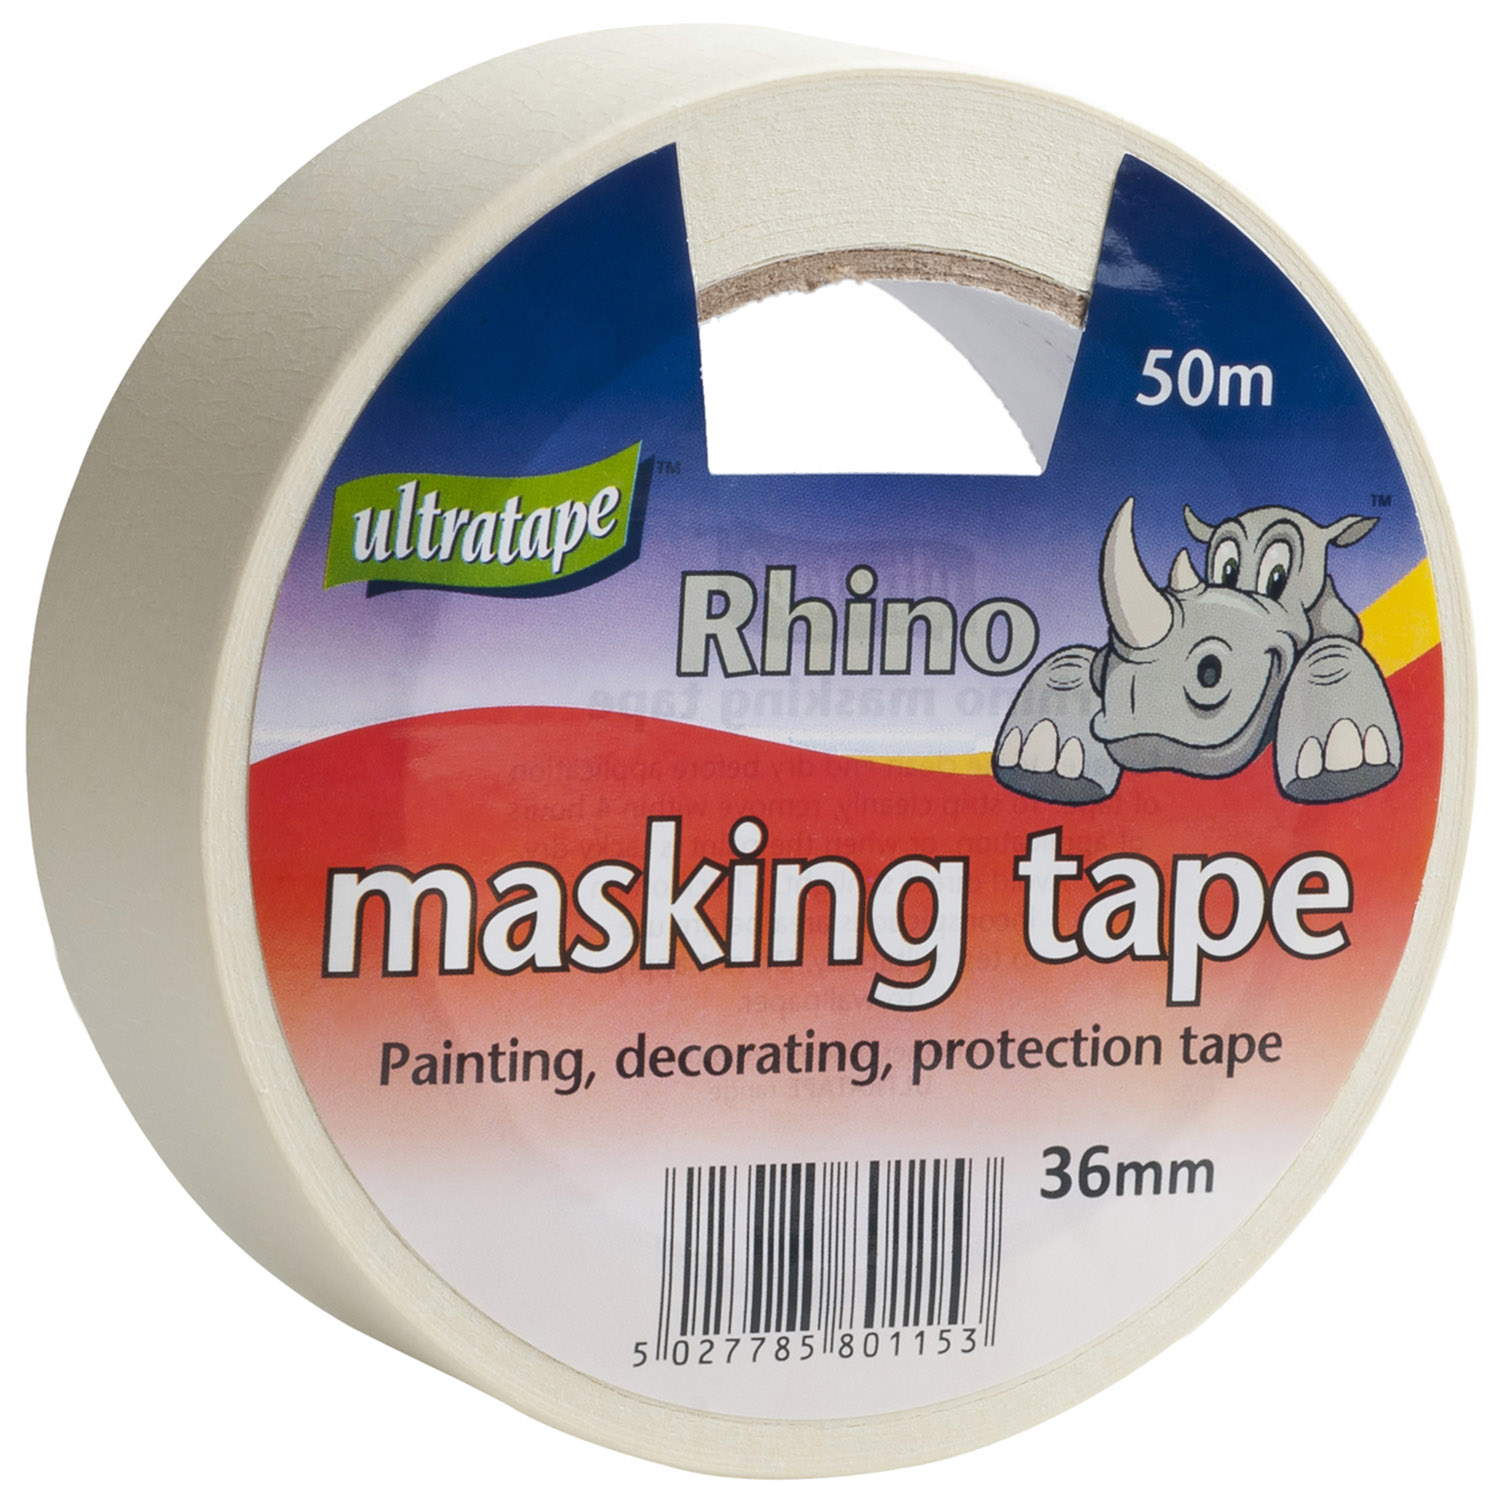 Ultratape Rhino 50m x 36mm Masking Tape Image